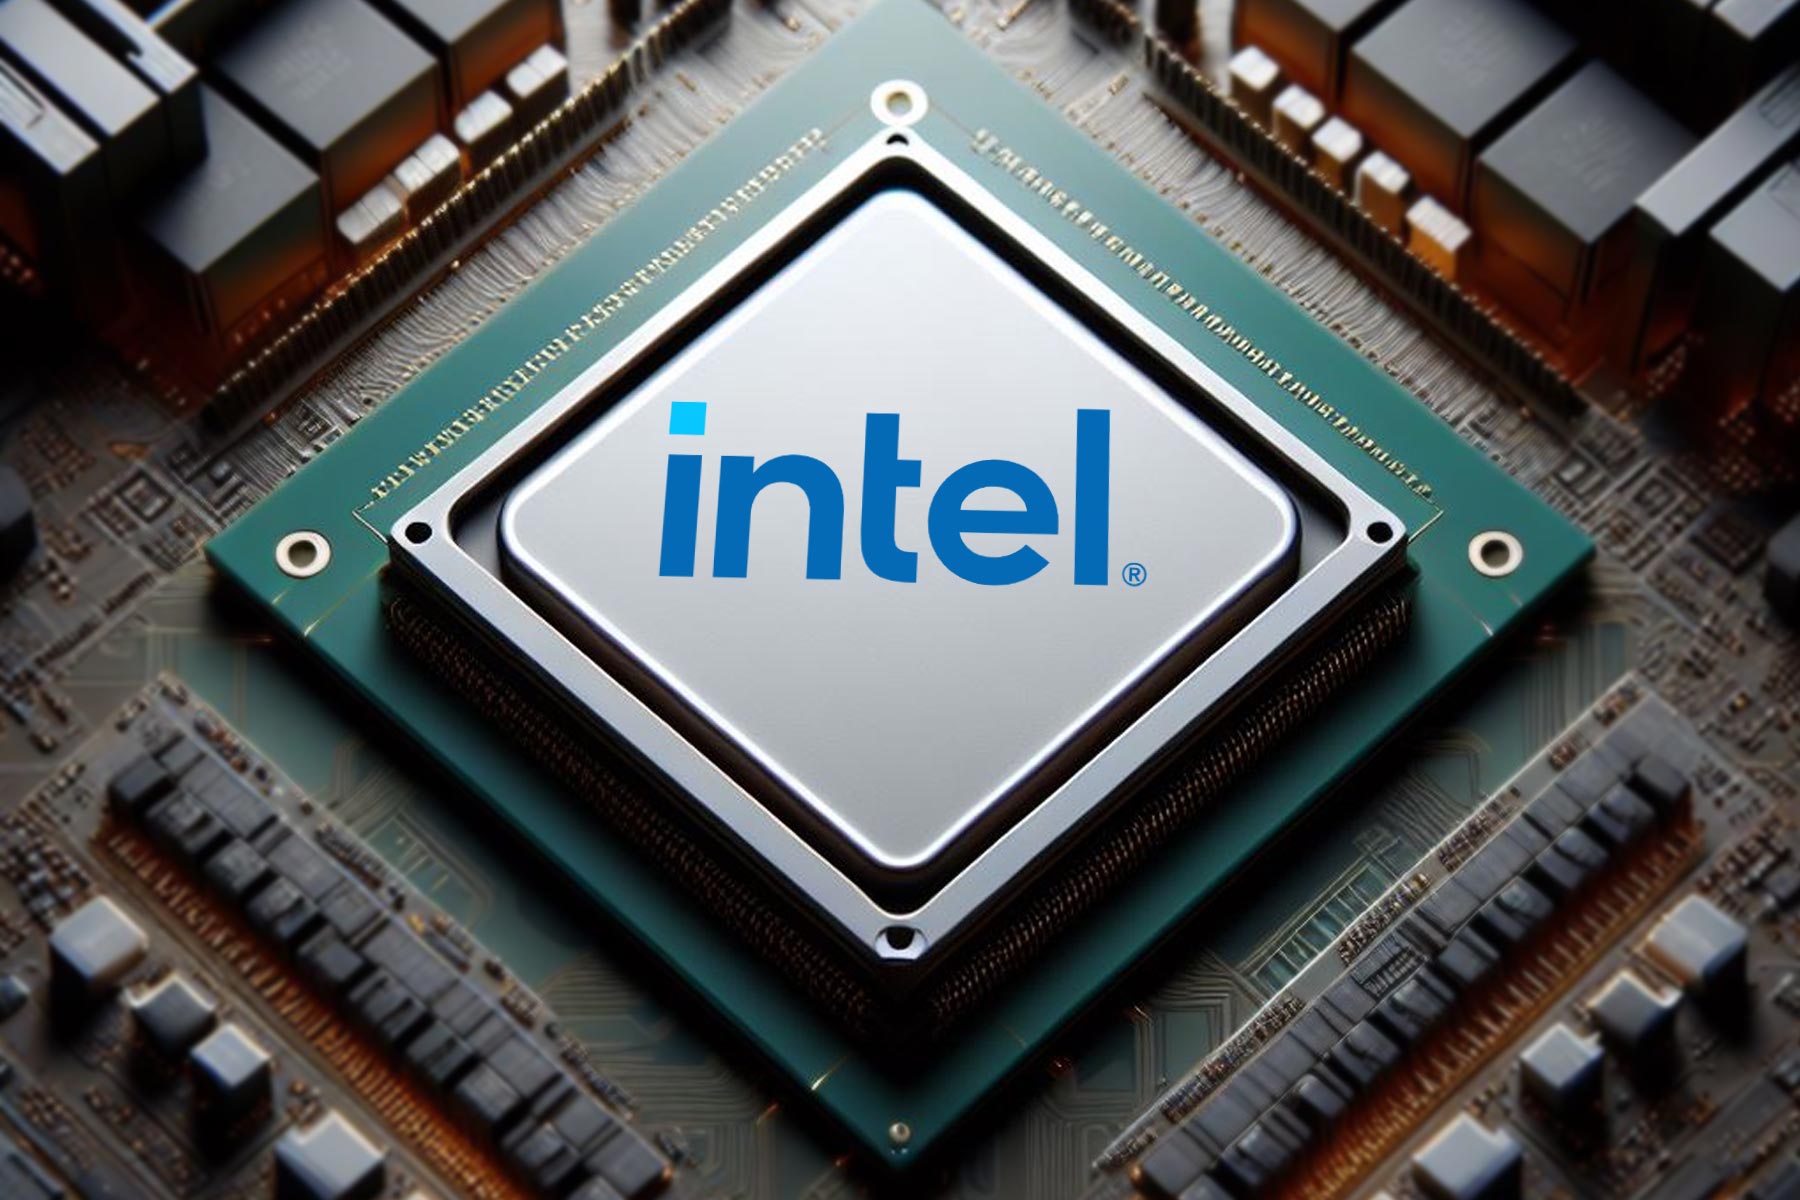 Intel Battlemage GPU is a powerhouse, as specs emerge online